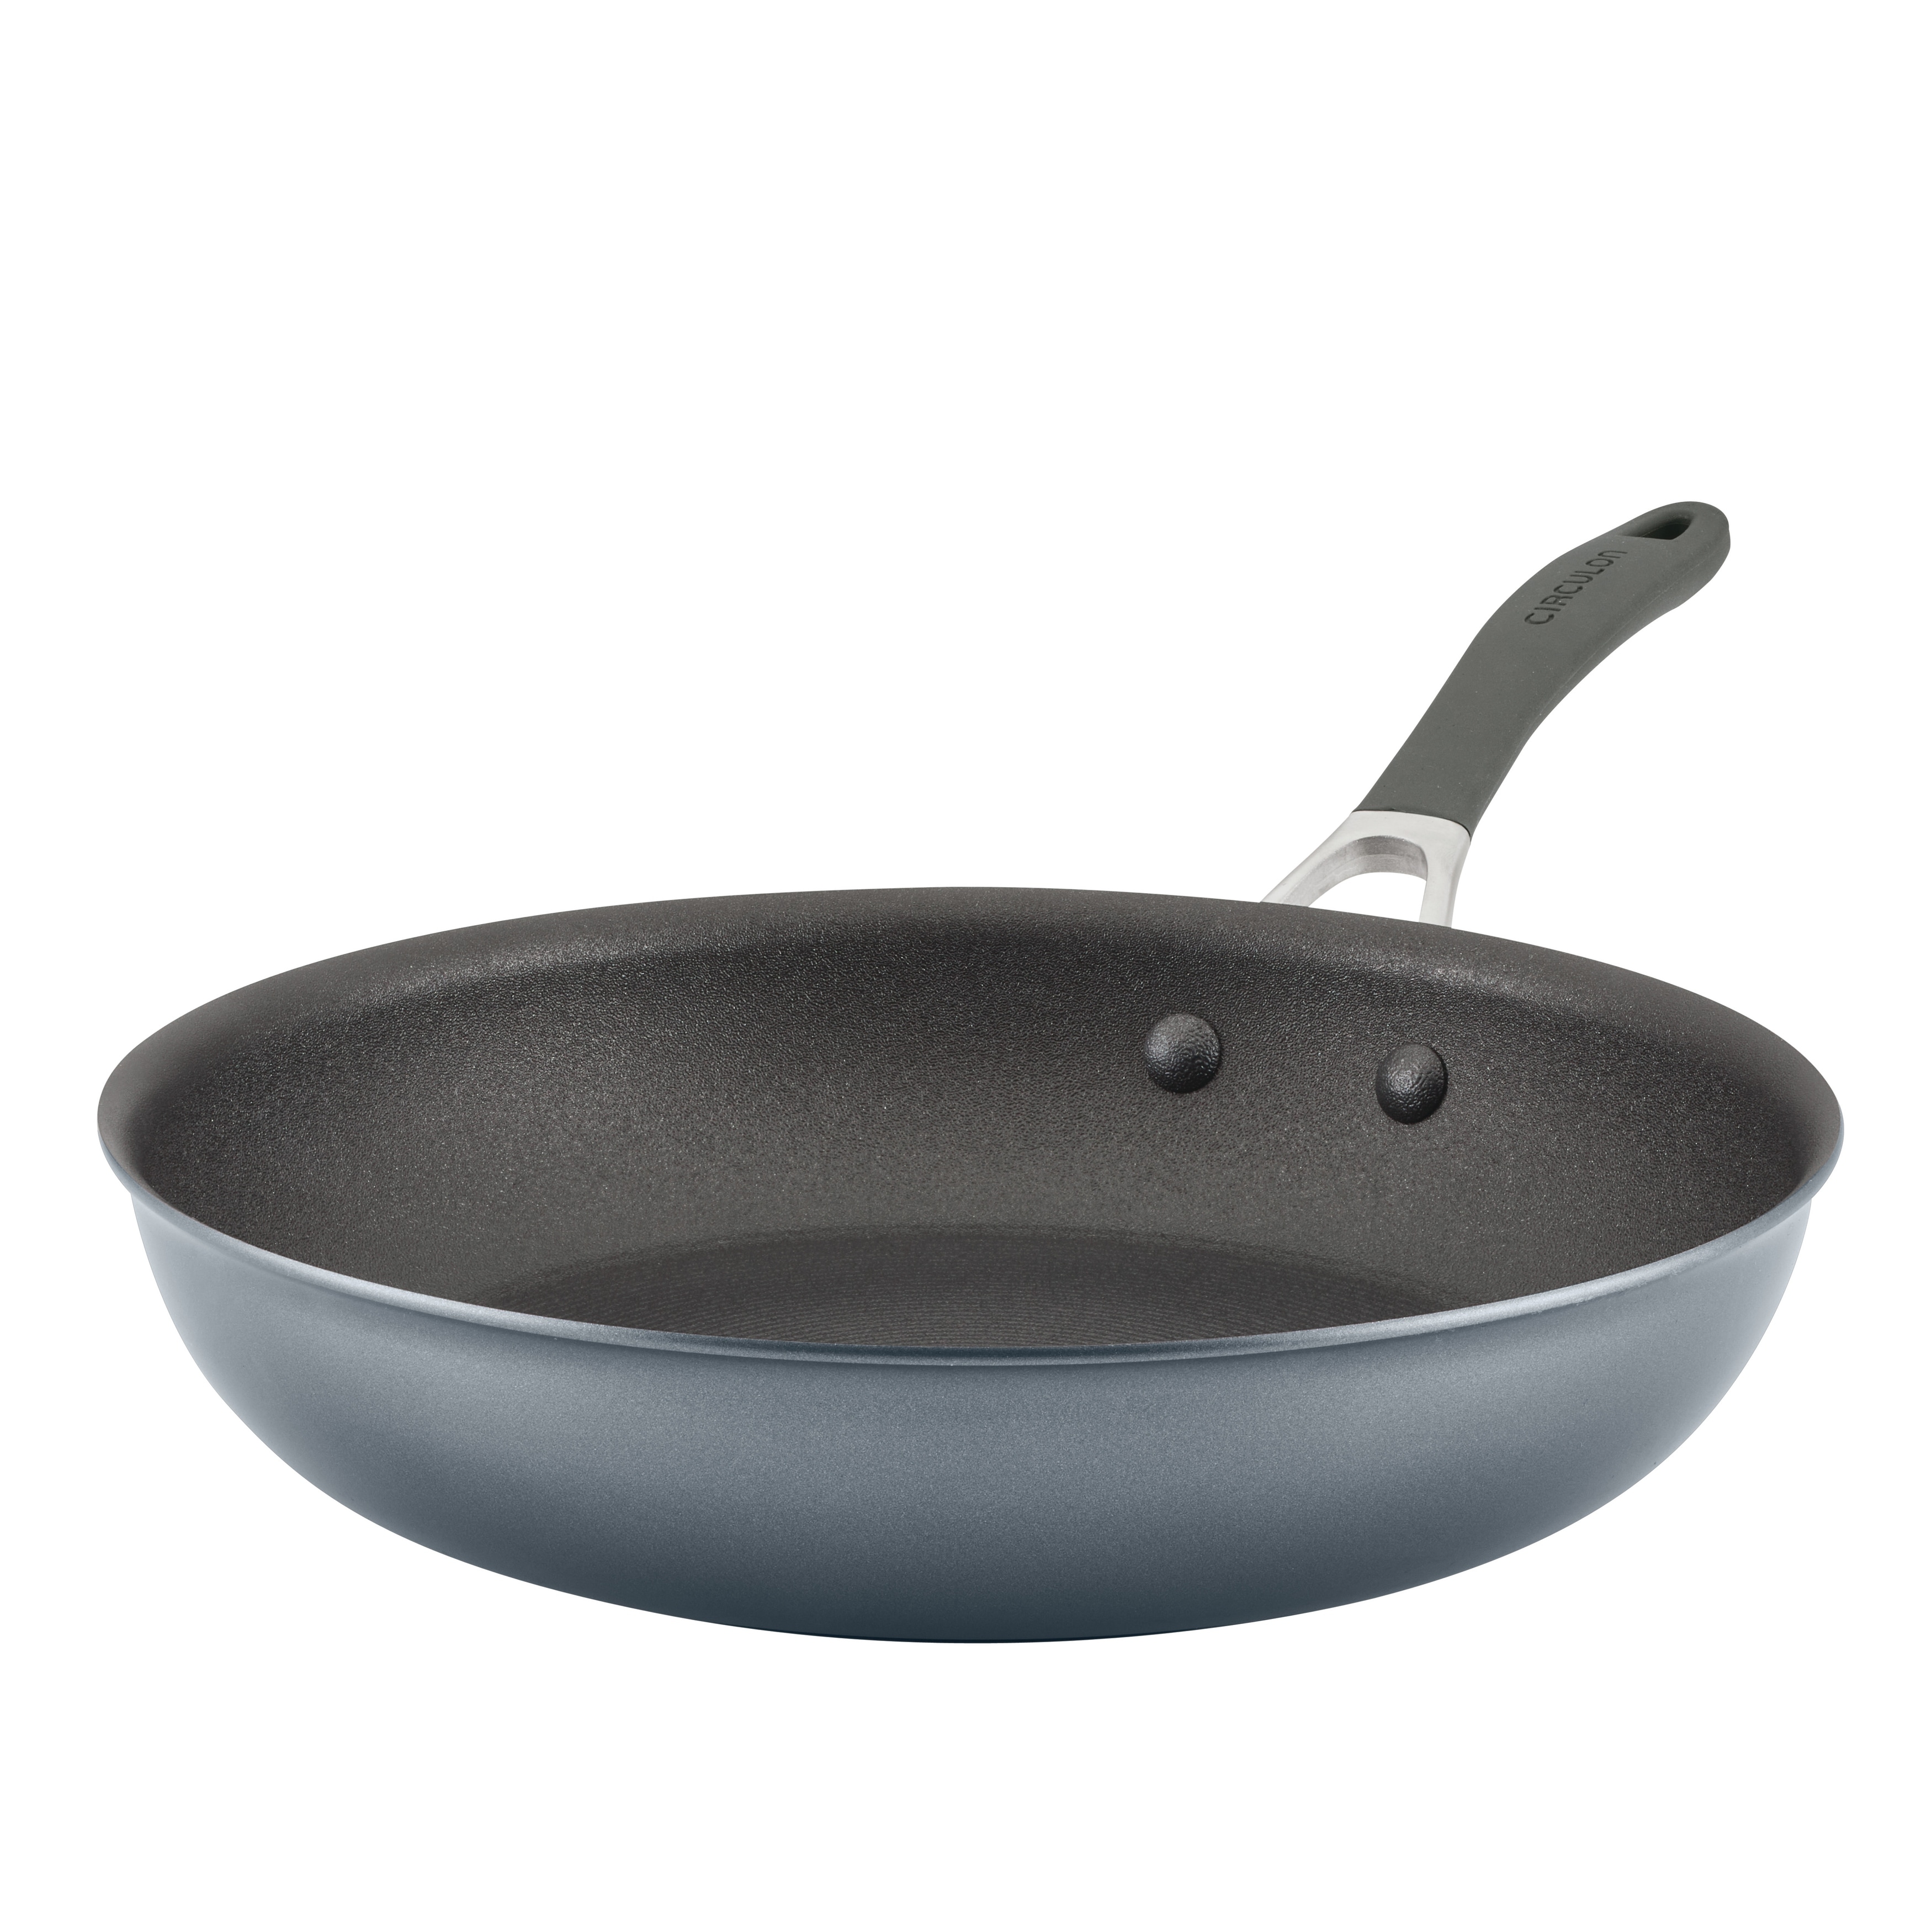 Anolon X Hybrid Nonstick Induction Frying Pan, 10-Inch, Super Dark Gray